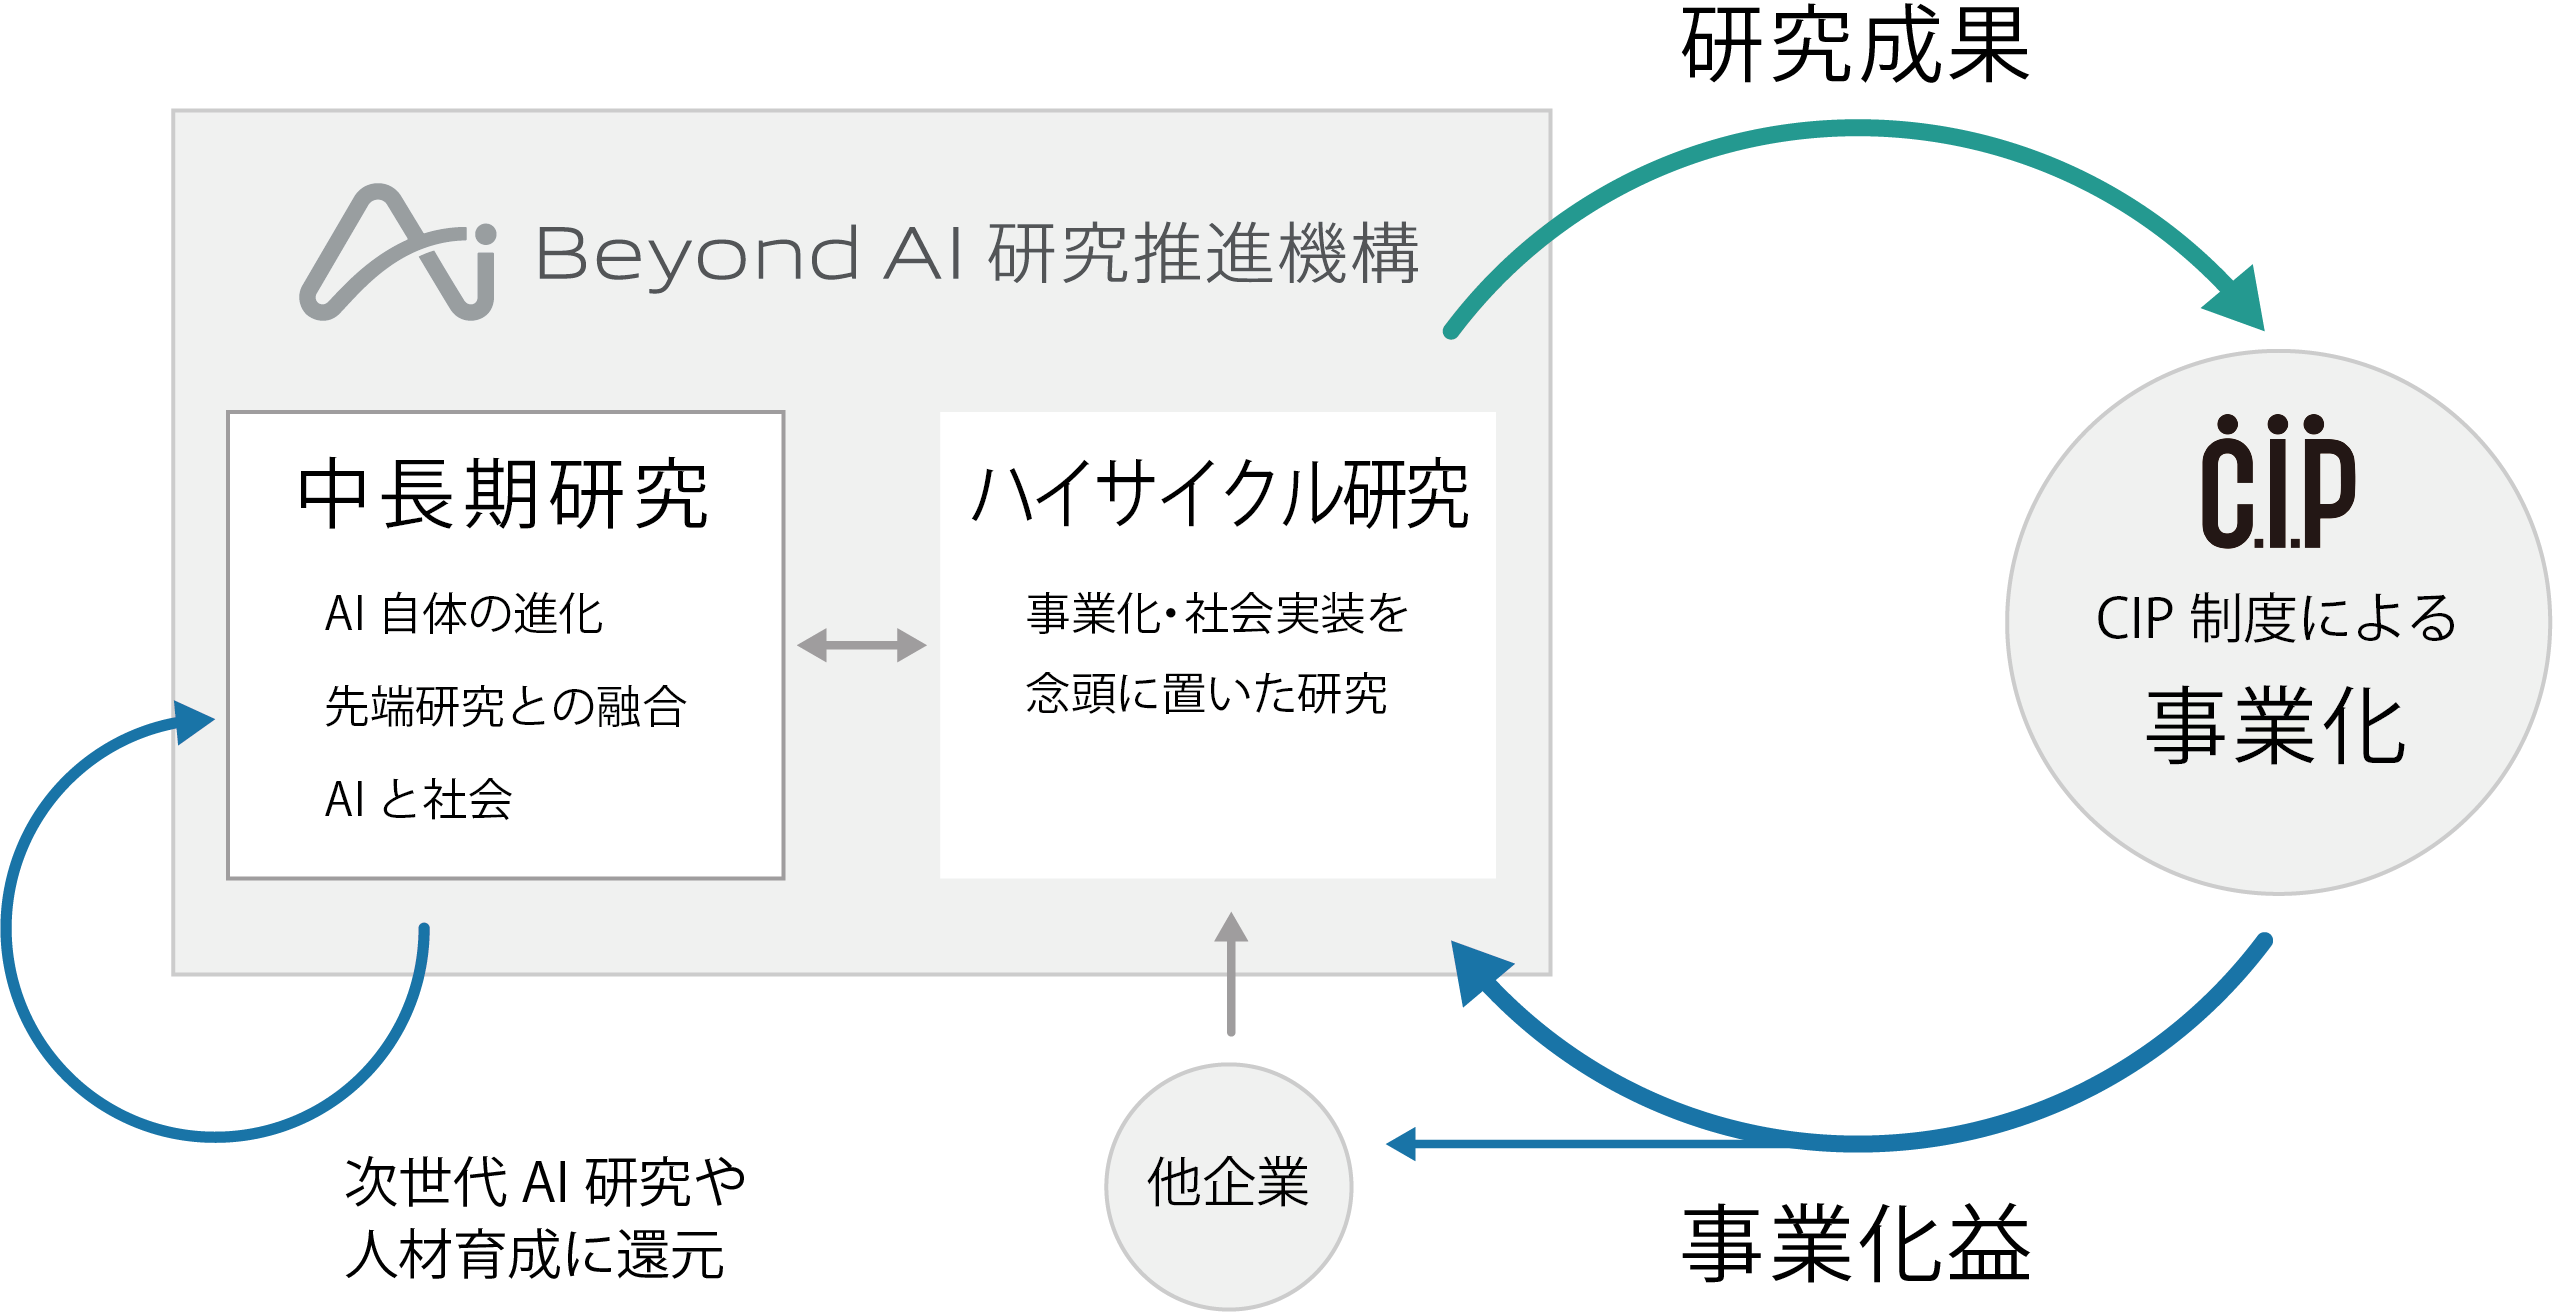 『Beyond AI 研究推進機構』が目指すエコシステム